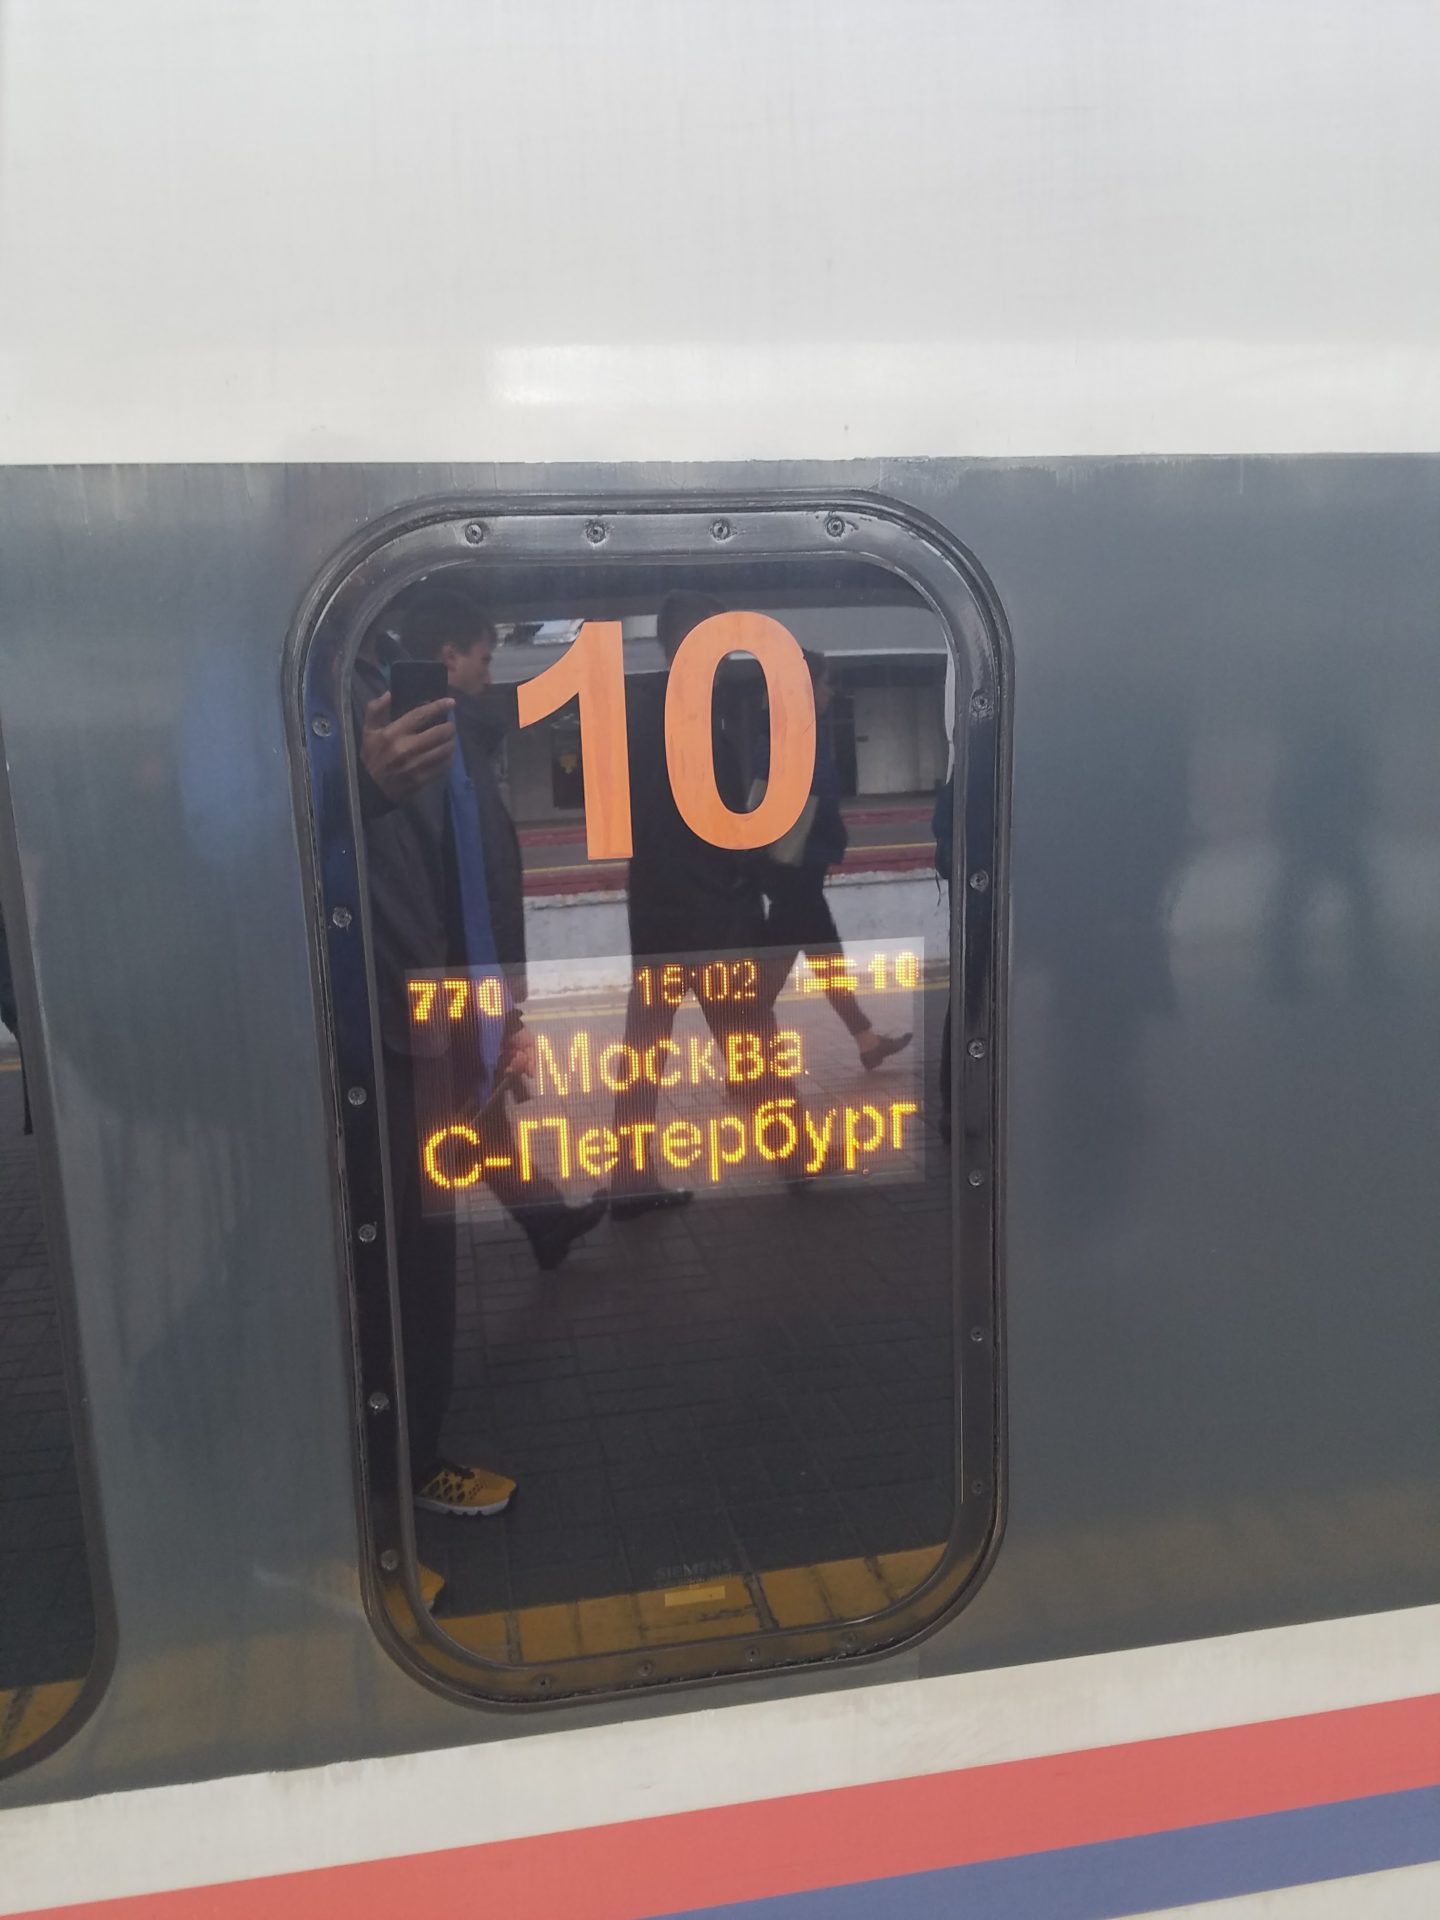 a window on a train